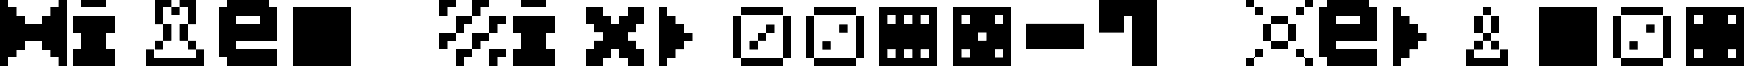 Pixel Dingbats-7 Regular font - pixel_dingbats-7.ttf